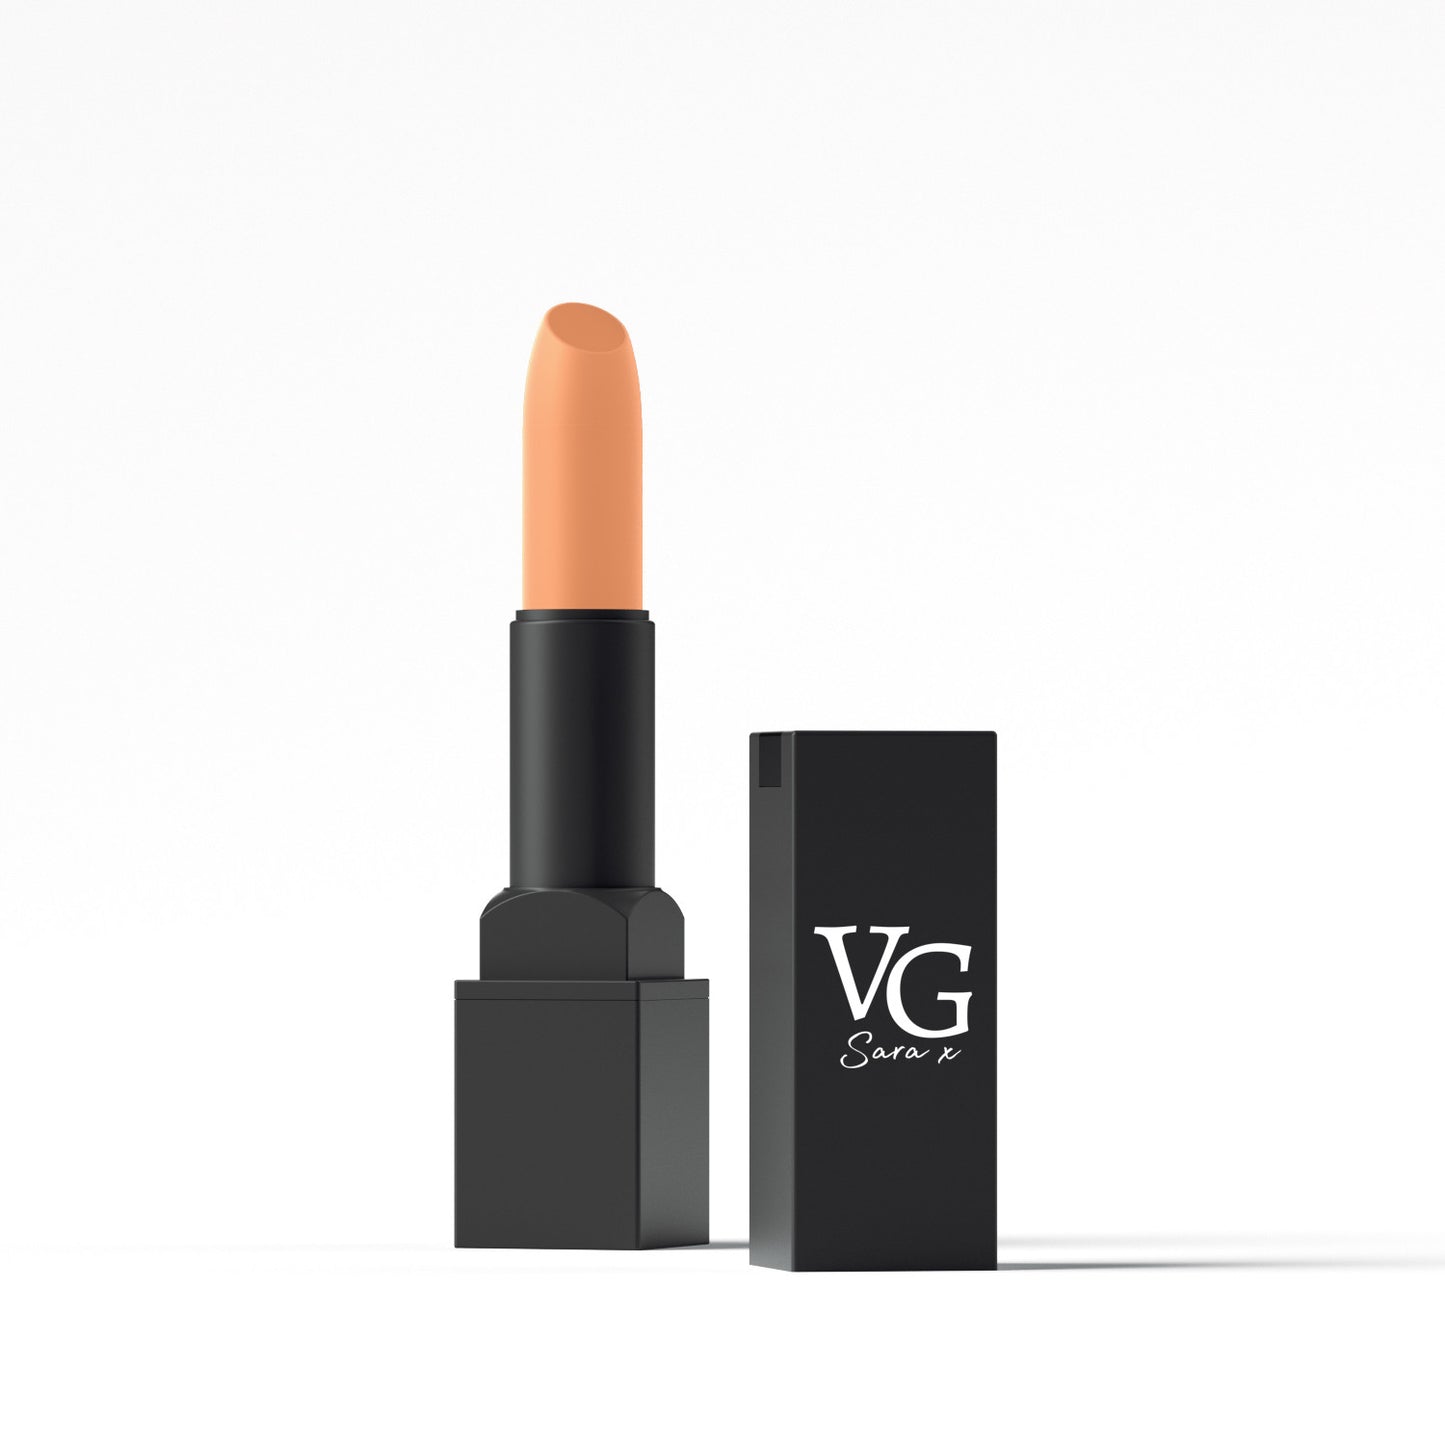 VG logo imprinted on Vitamin E enriched lipstick